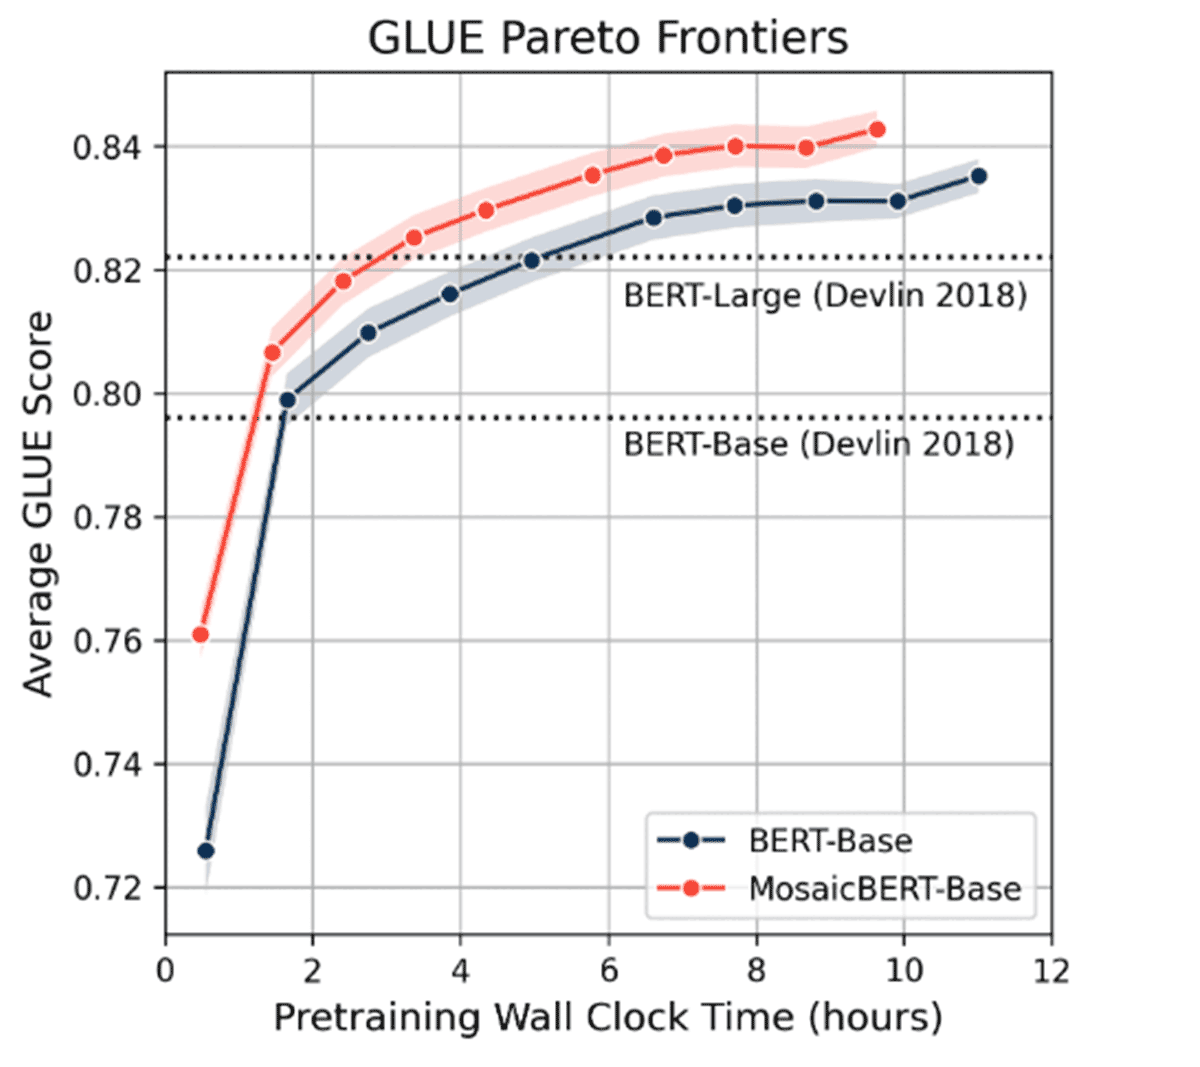 Figure 1: Pareto curves of average GLUE scores for MosaicBERT-Base and the standard BERT-Base